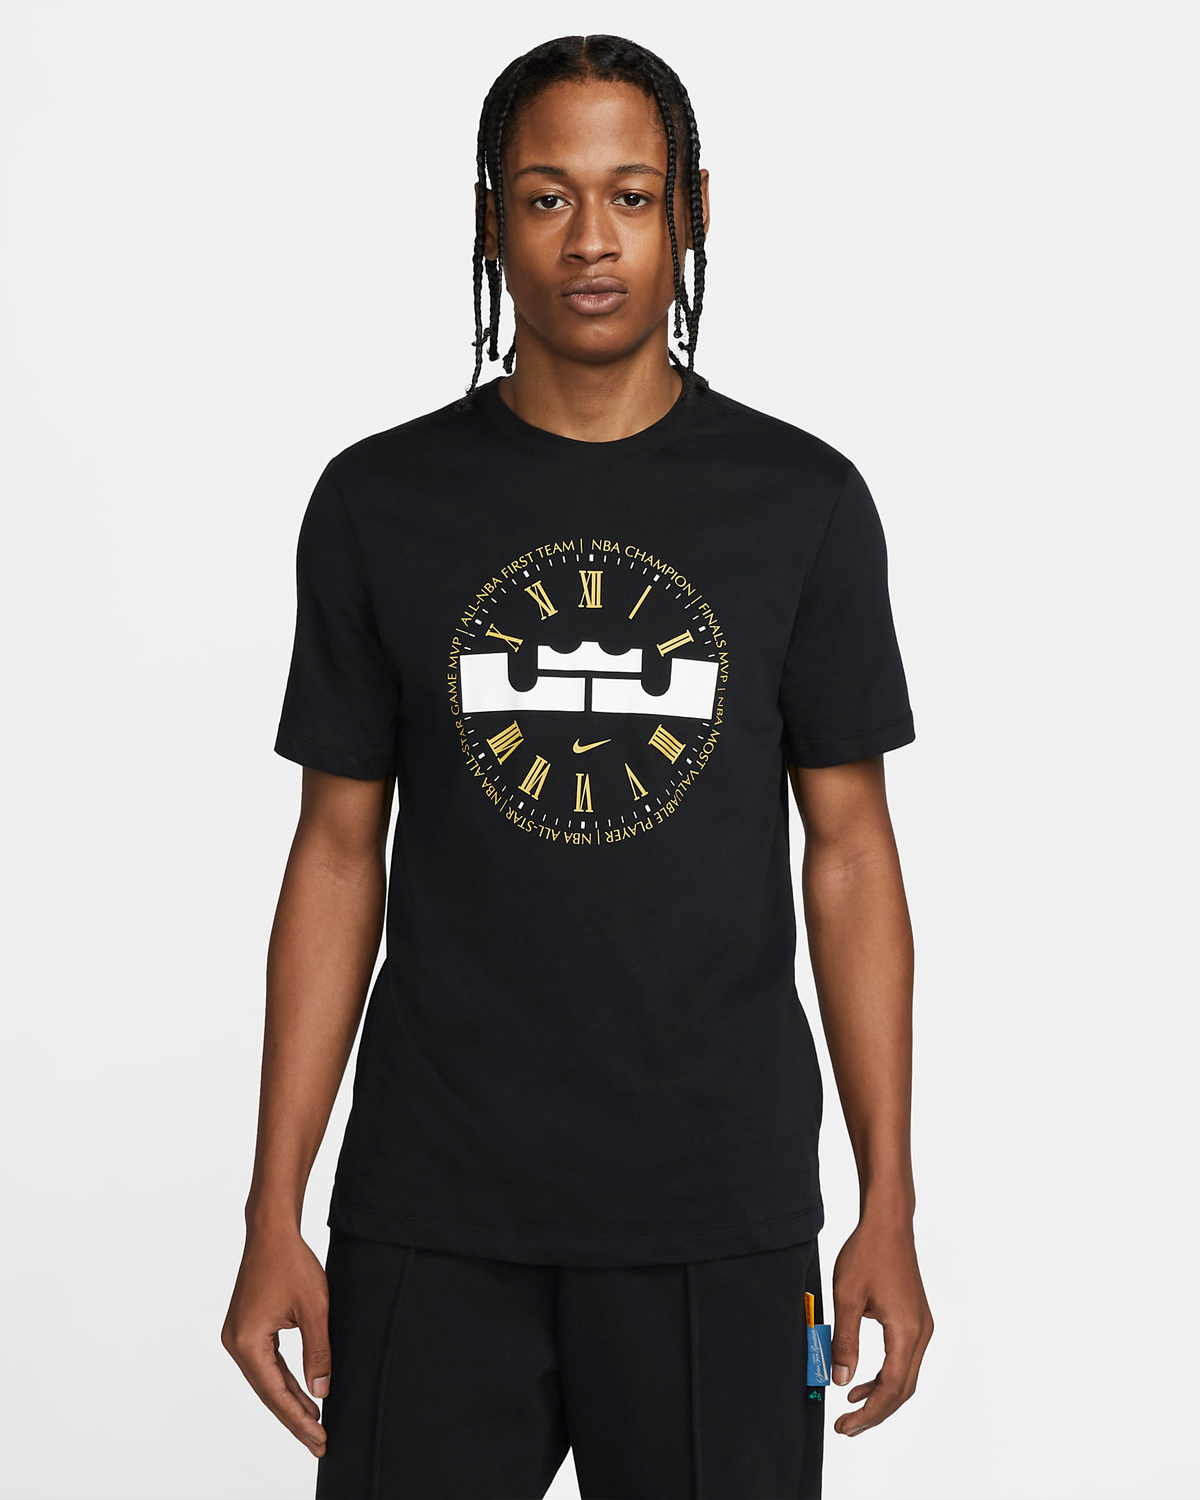 Nike-LeBron-Father-Time-T-Shirt-Black-White-Gold